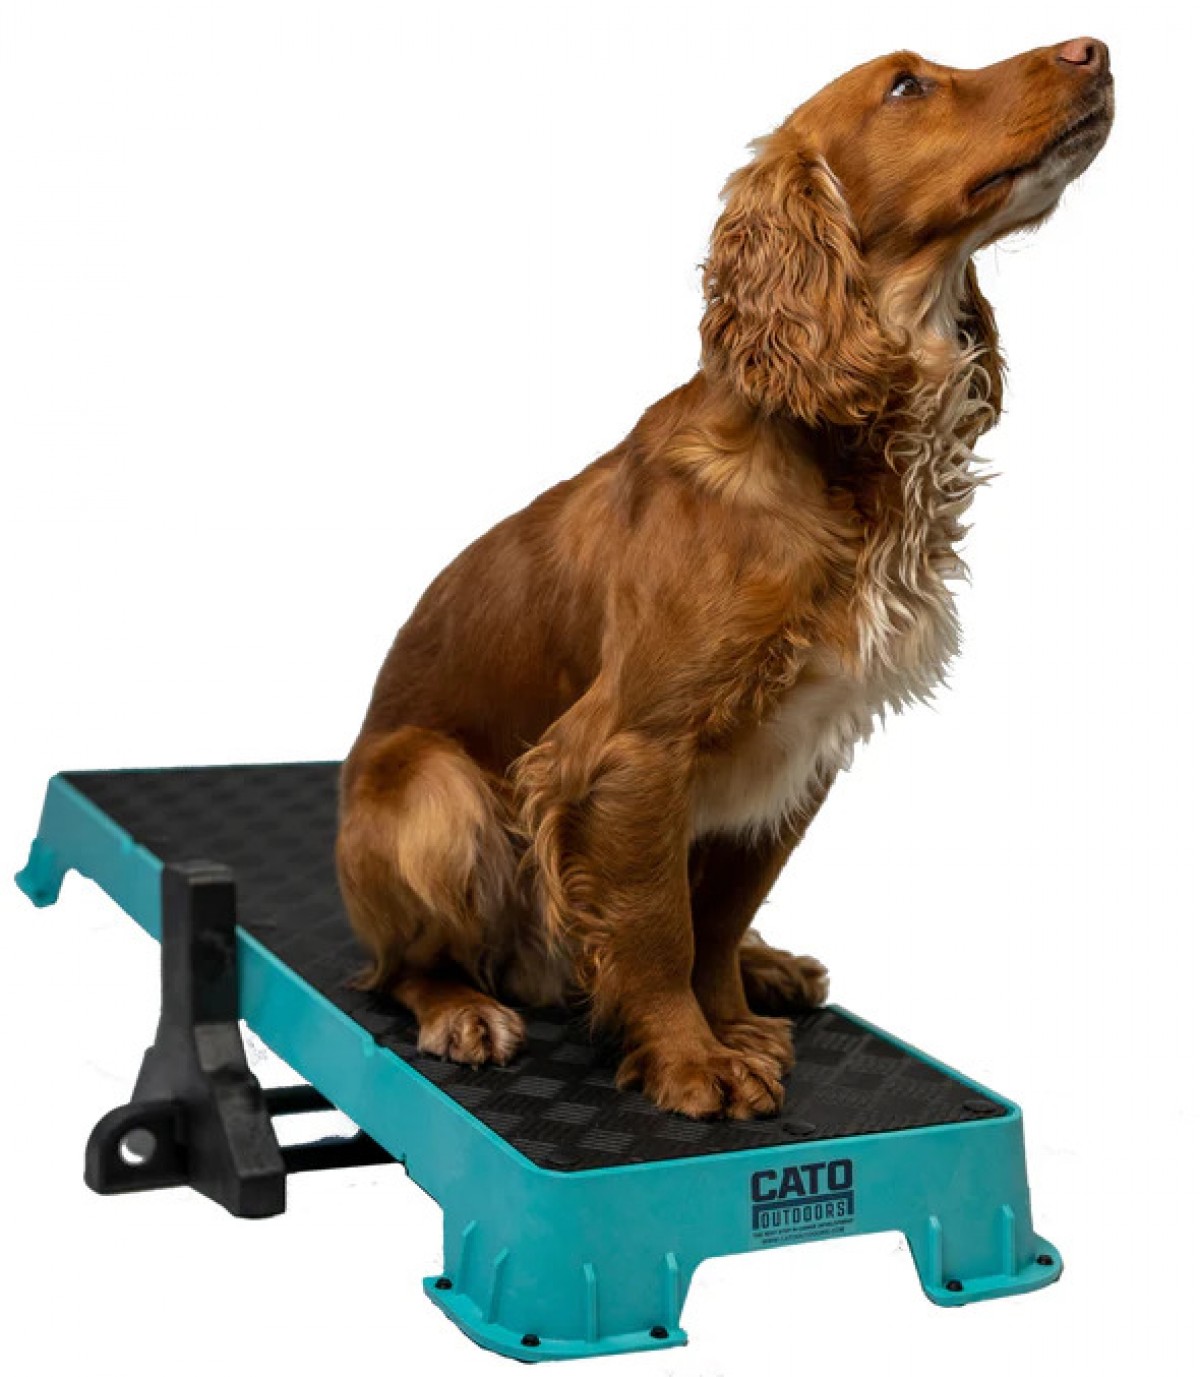 Cato Board Dog Training Platform – 16in wide x 24in long x 3.5in